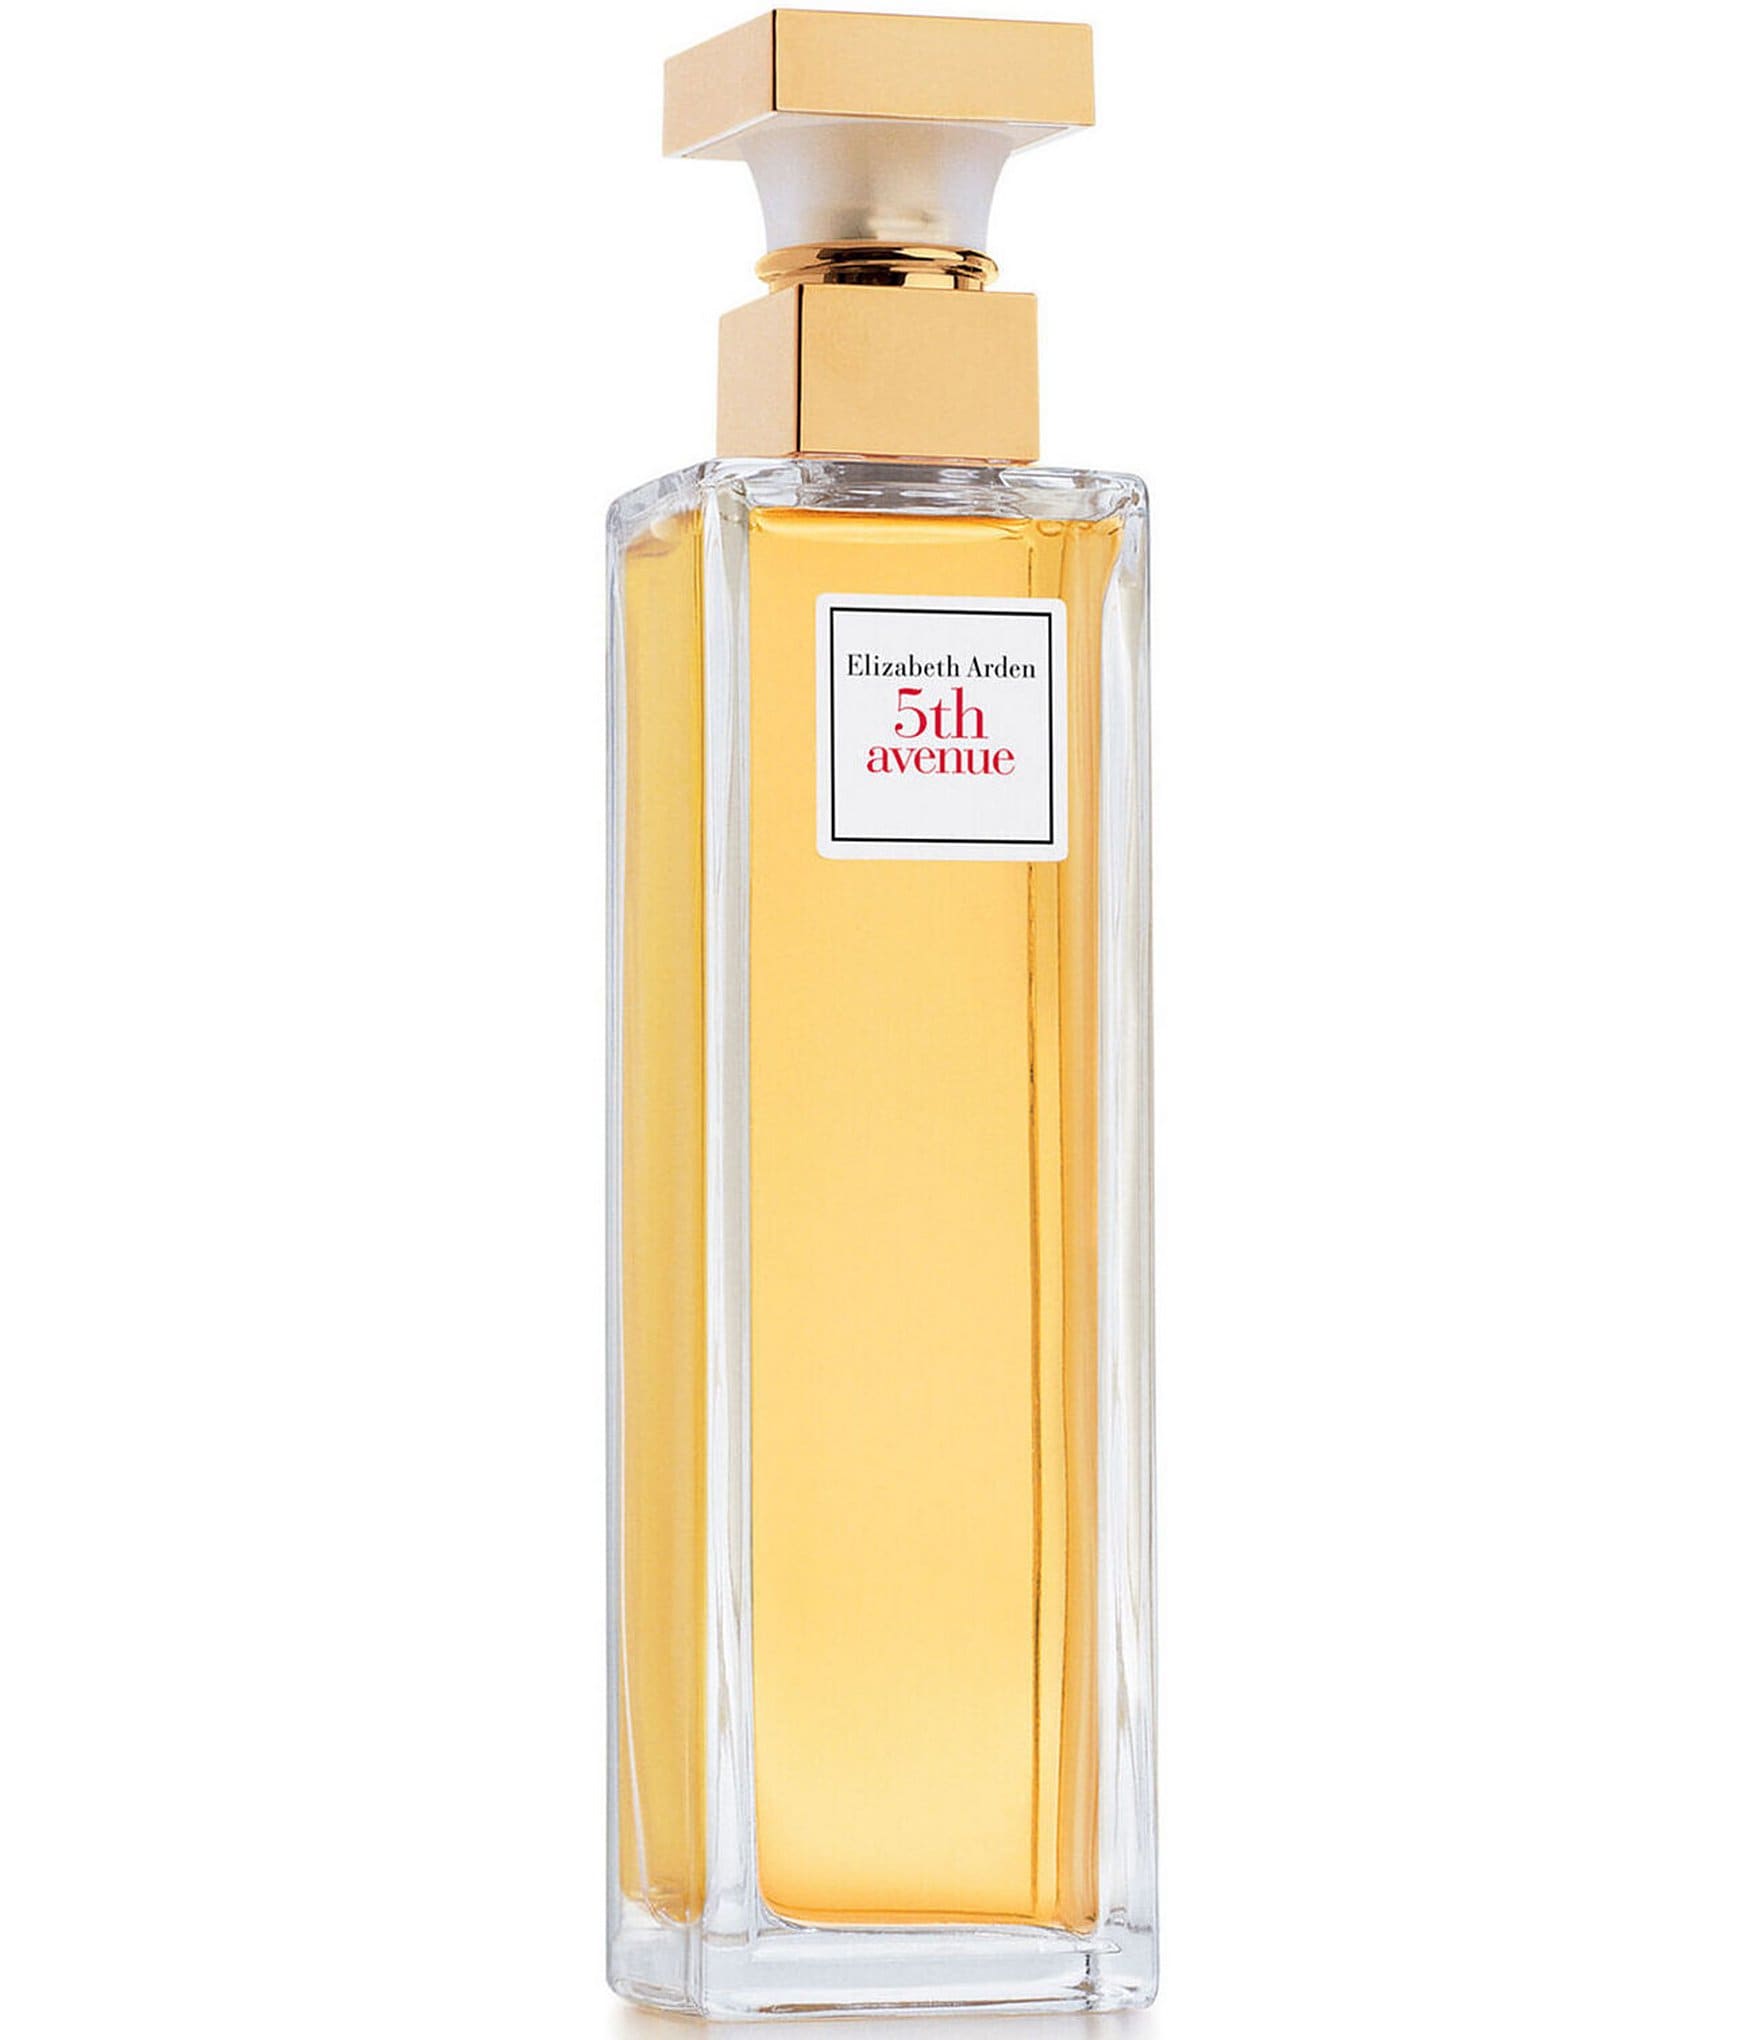 Elizabeth Arden Avenue Eau de Parfum Dillard's